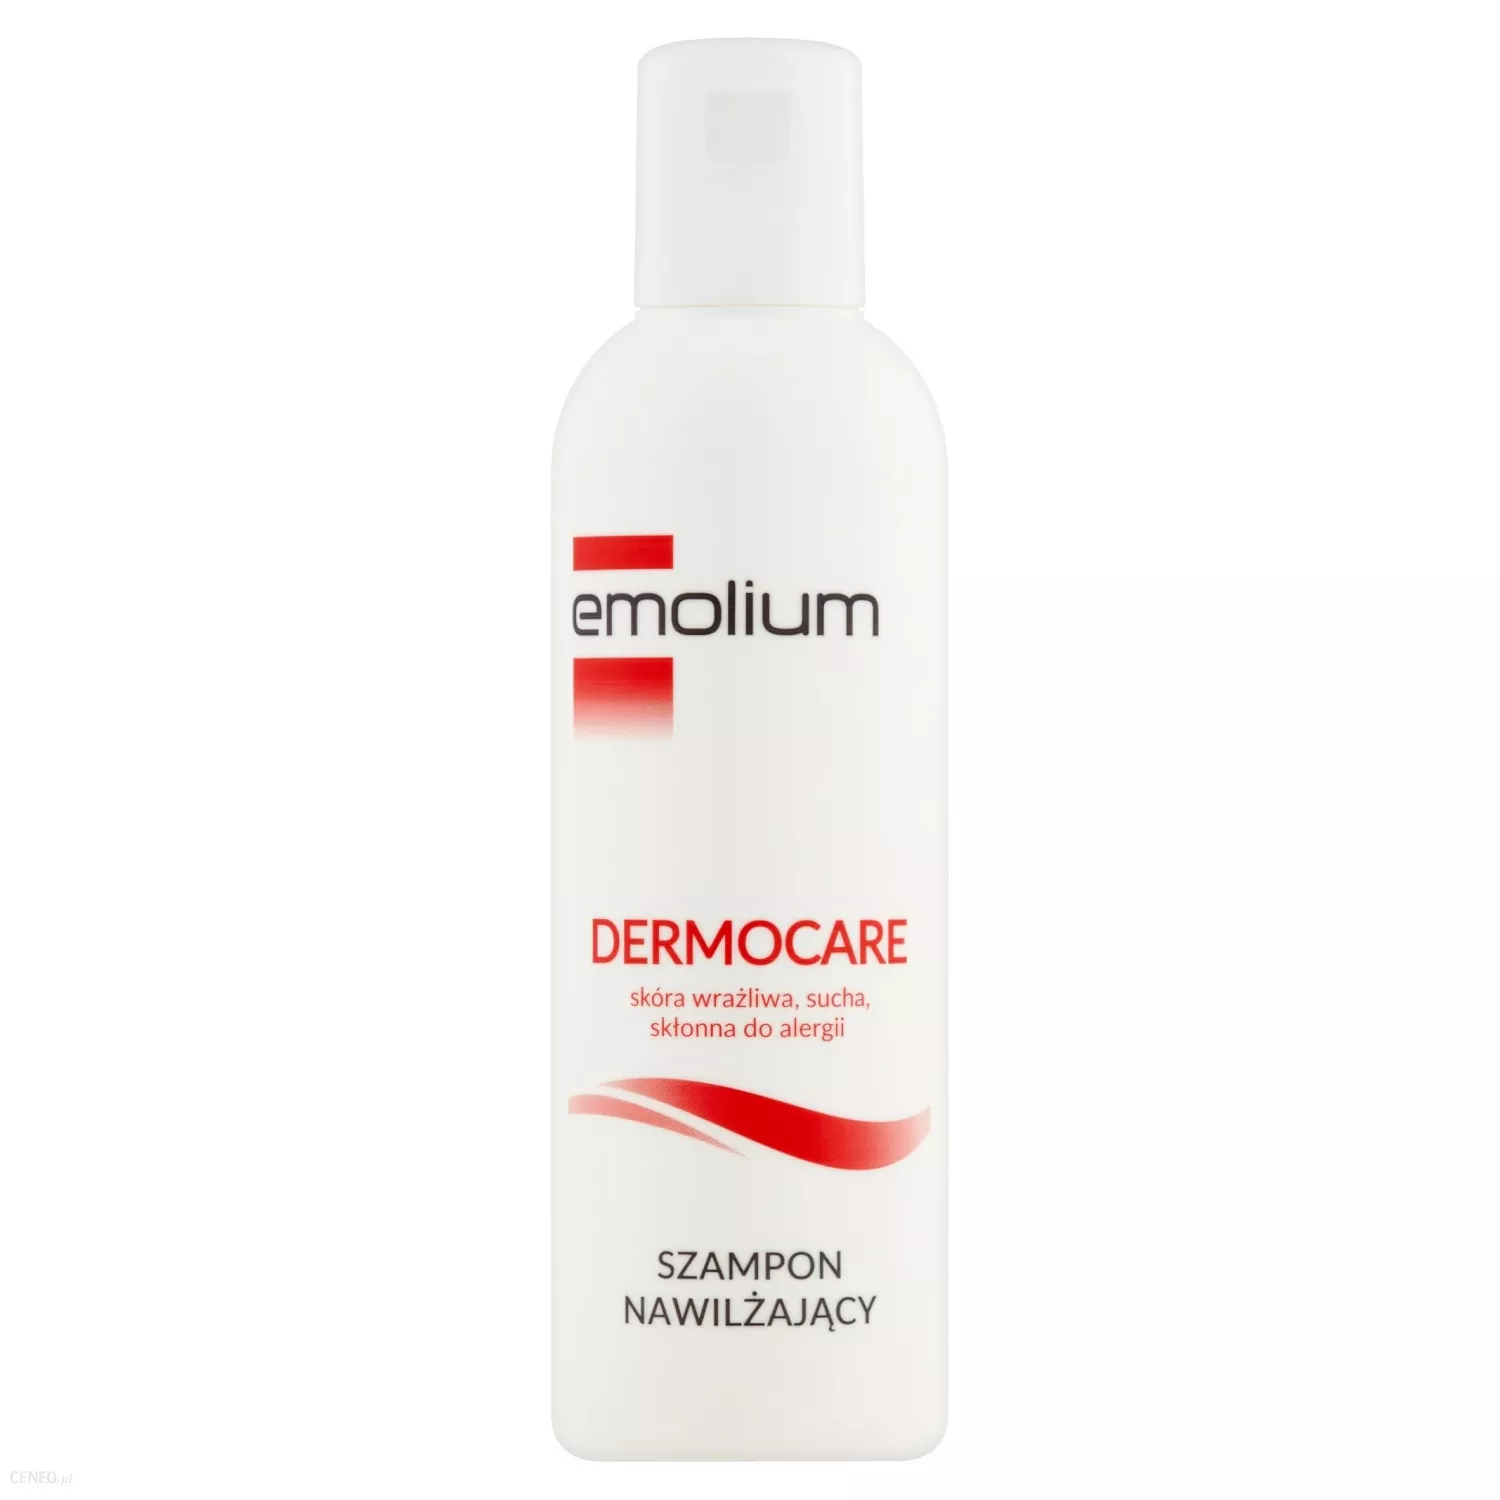 emolium dermocare szampon skład